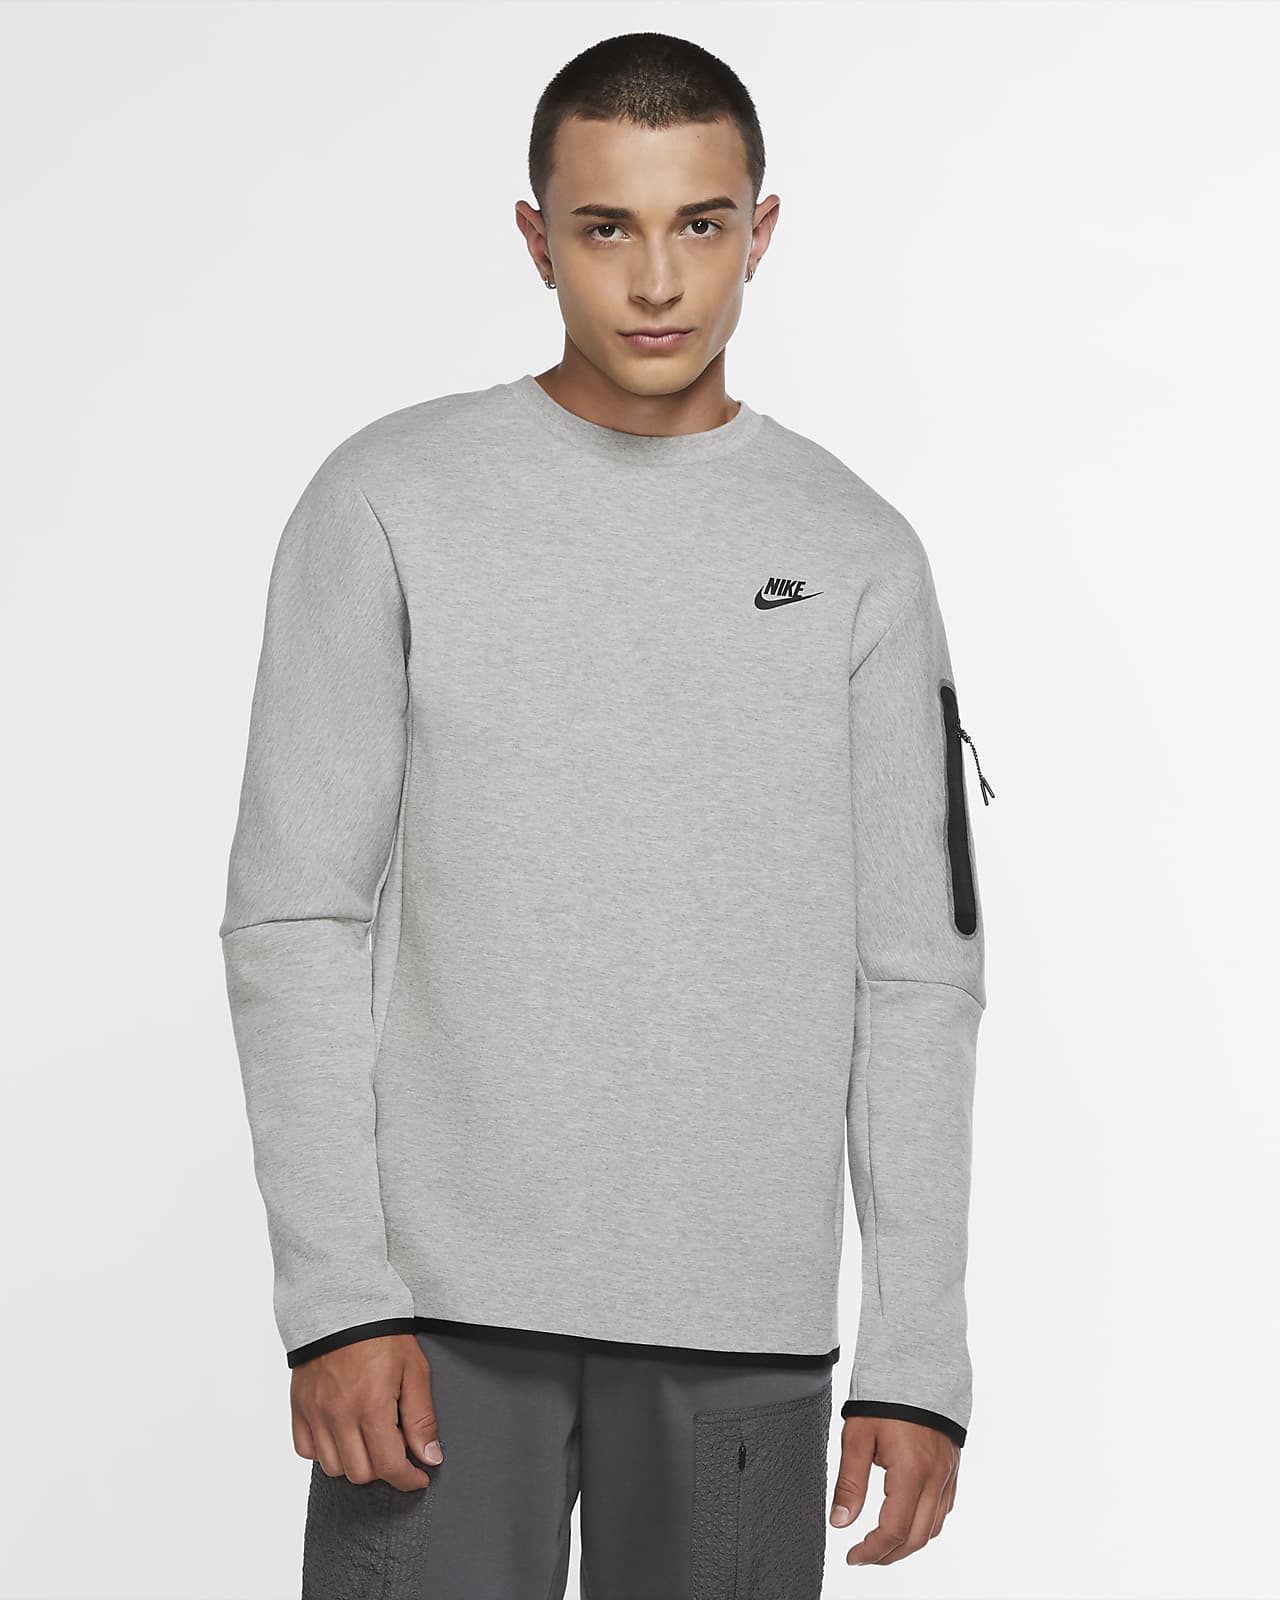 makkelijk te gebruiken overschot Waakzaamheid Nike Sportswear Tech Fleece Men's Crew Sweatshirt. Nike LU